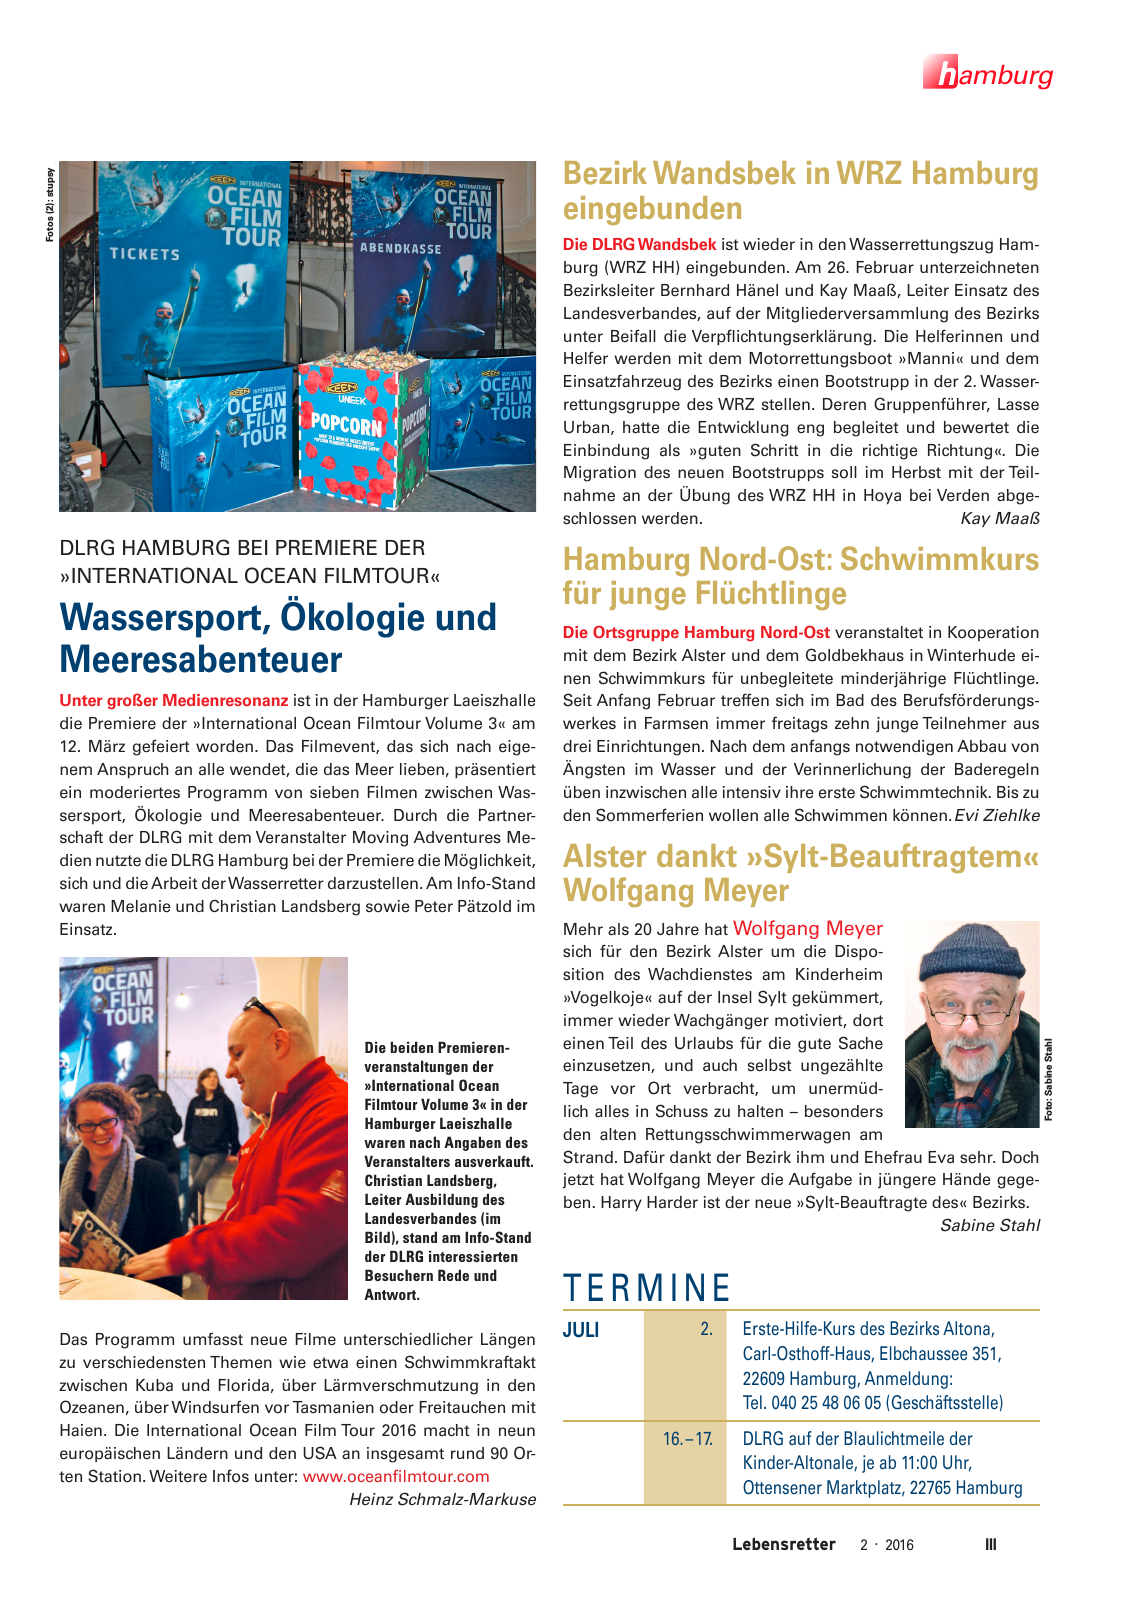 Vorschau Lebensretter 2/2016 - Regionalausgabe Hamburg Seite 5